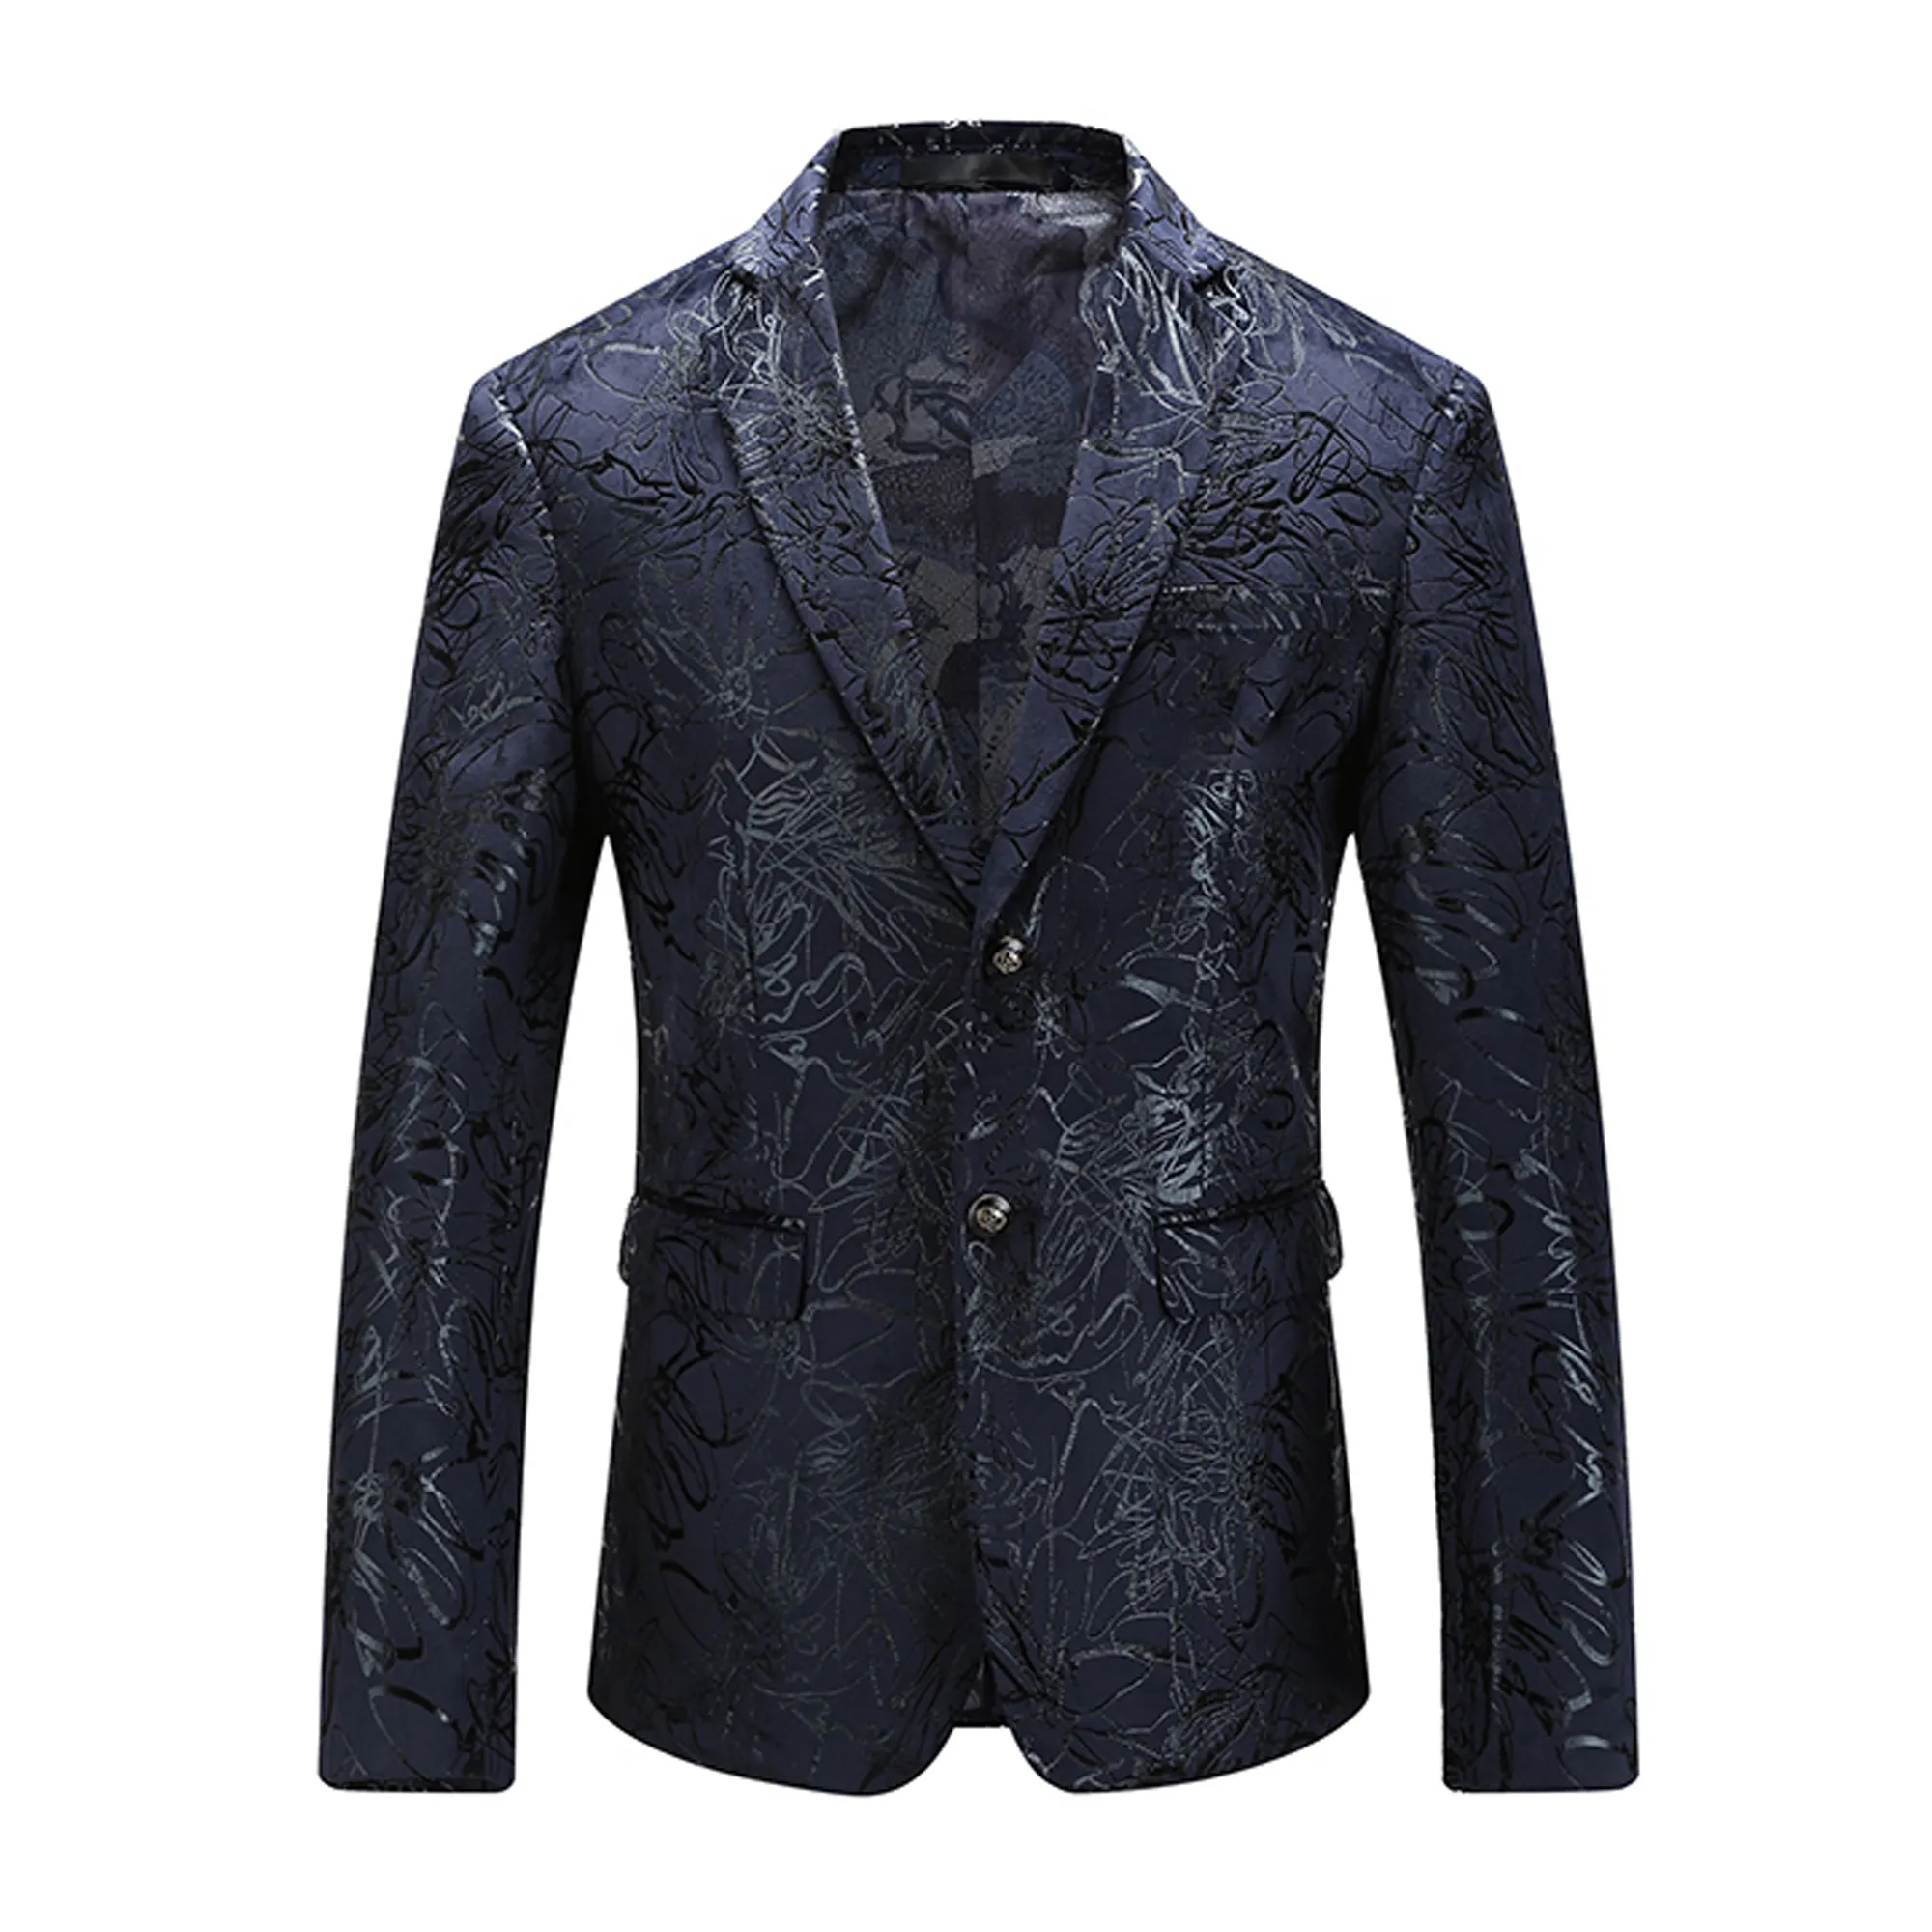 Men Business Casual Blazer Plus Size Solid Color Suit Jacket bamboo fiber Work Clothes Oversize Coats Male Brand Clothing Tuxedo